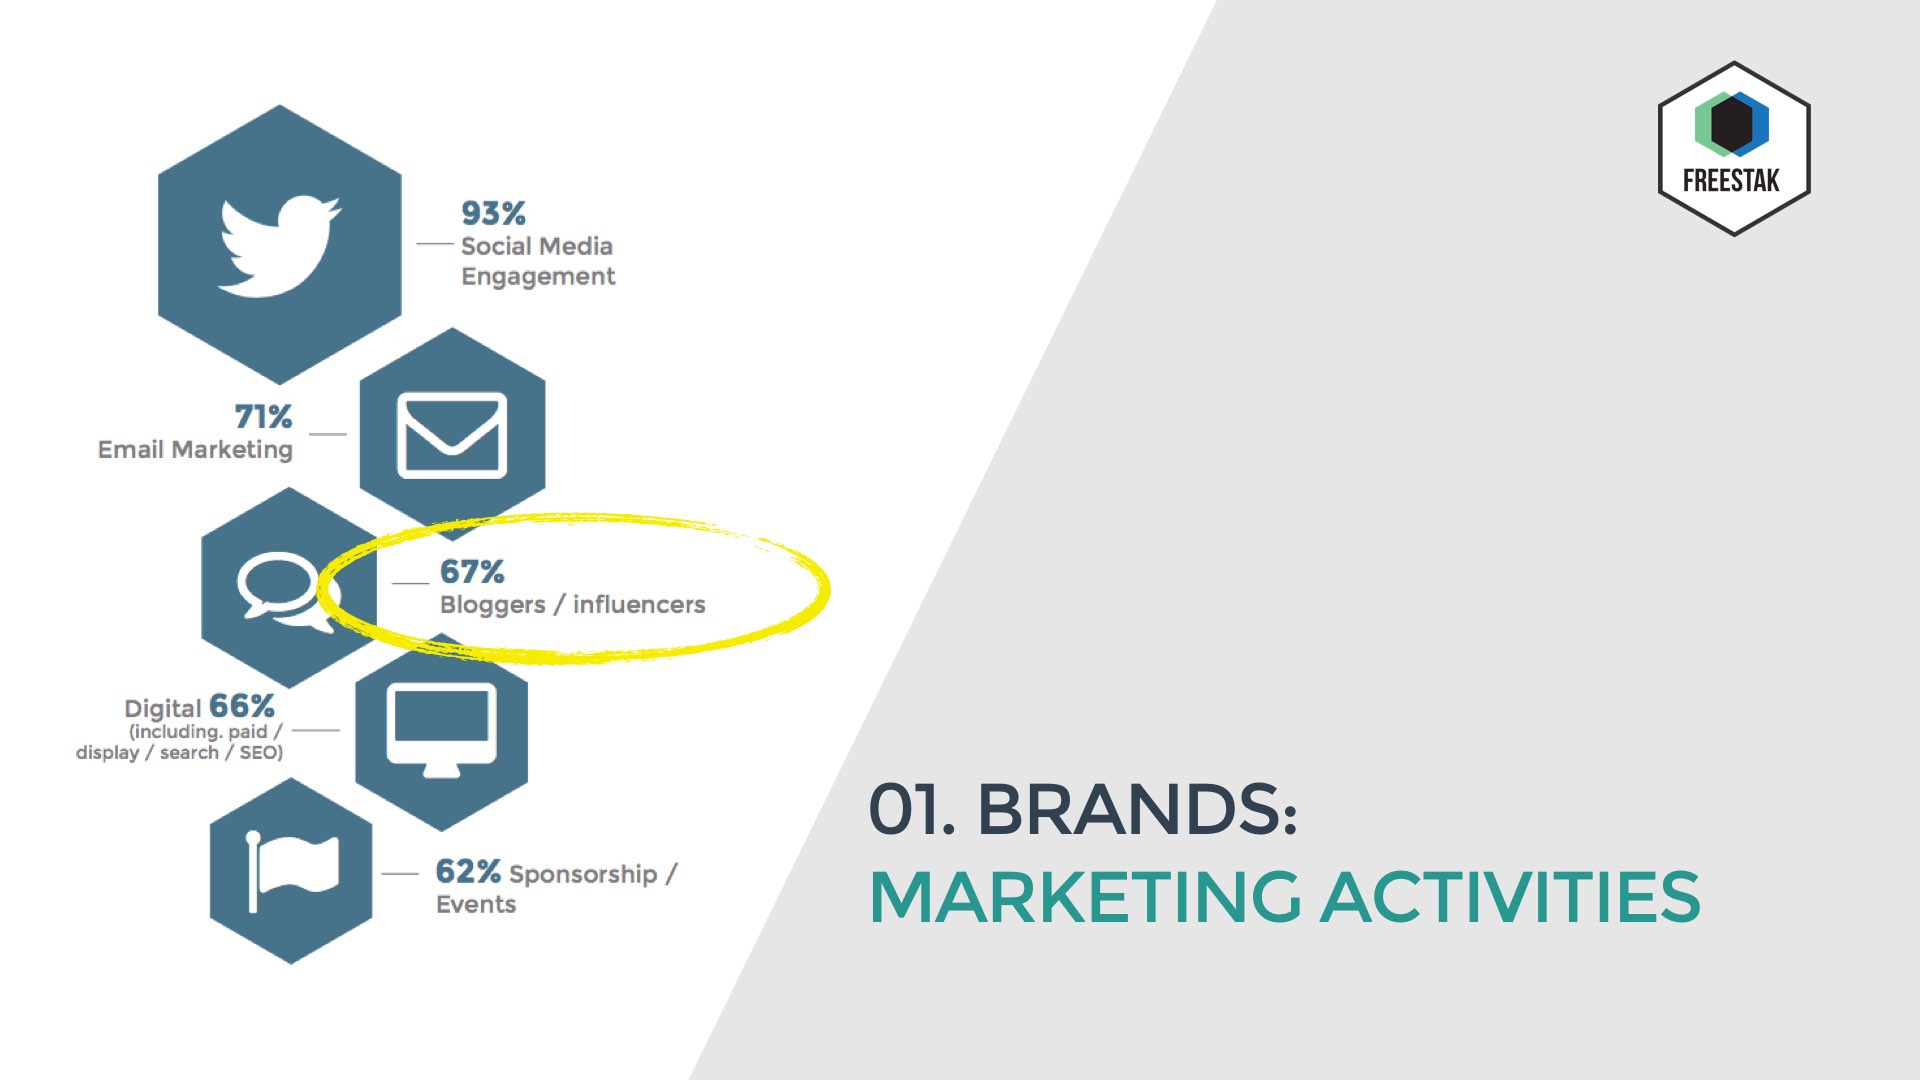 Influencer Marketing Report - Key Insights